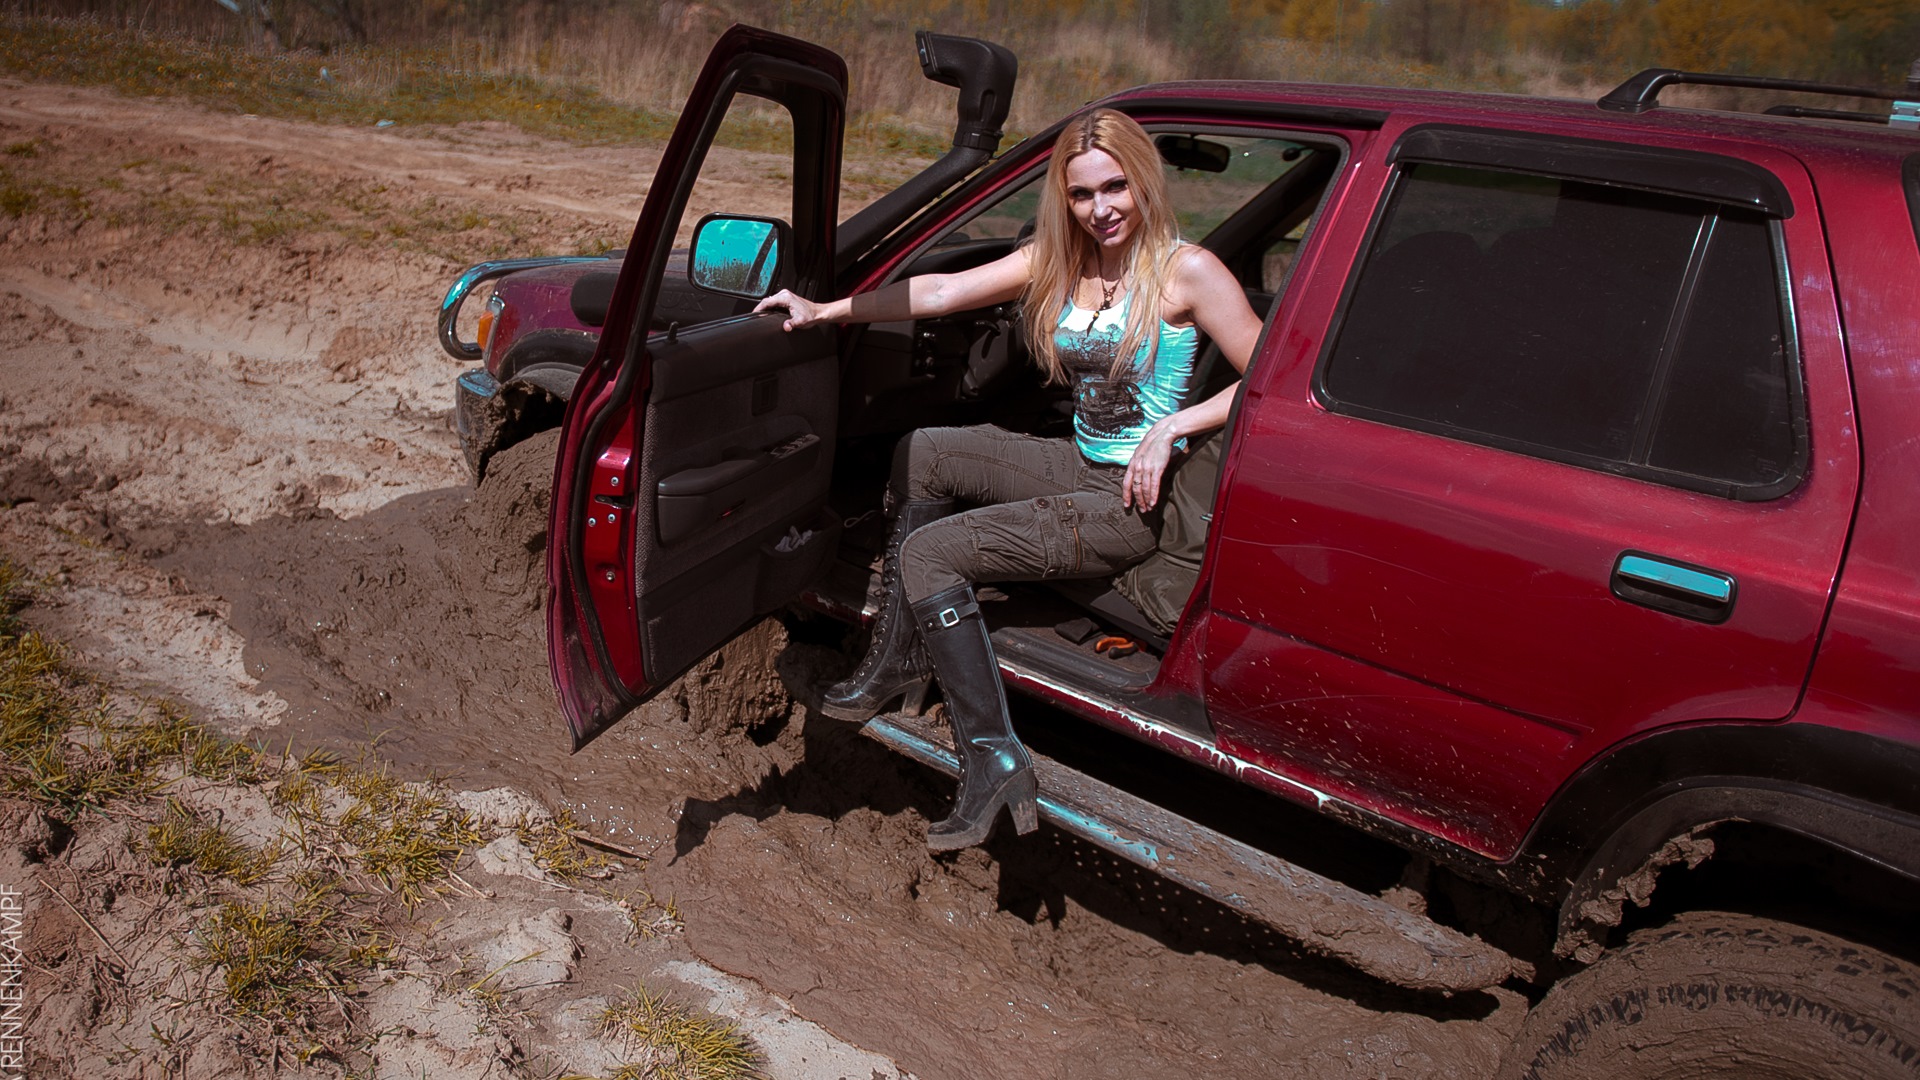 Slideshow dirty jeep girl.